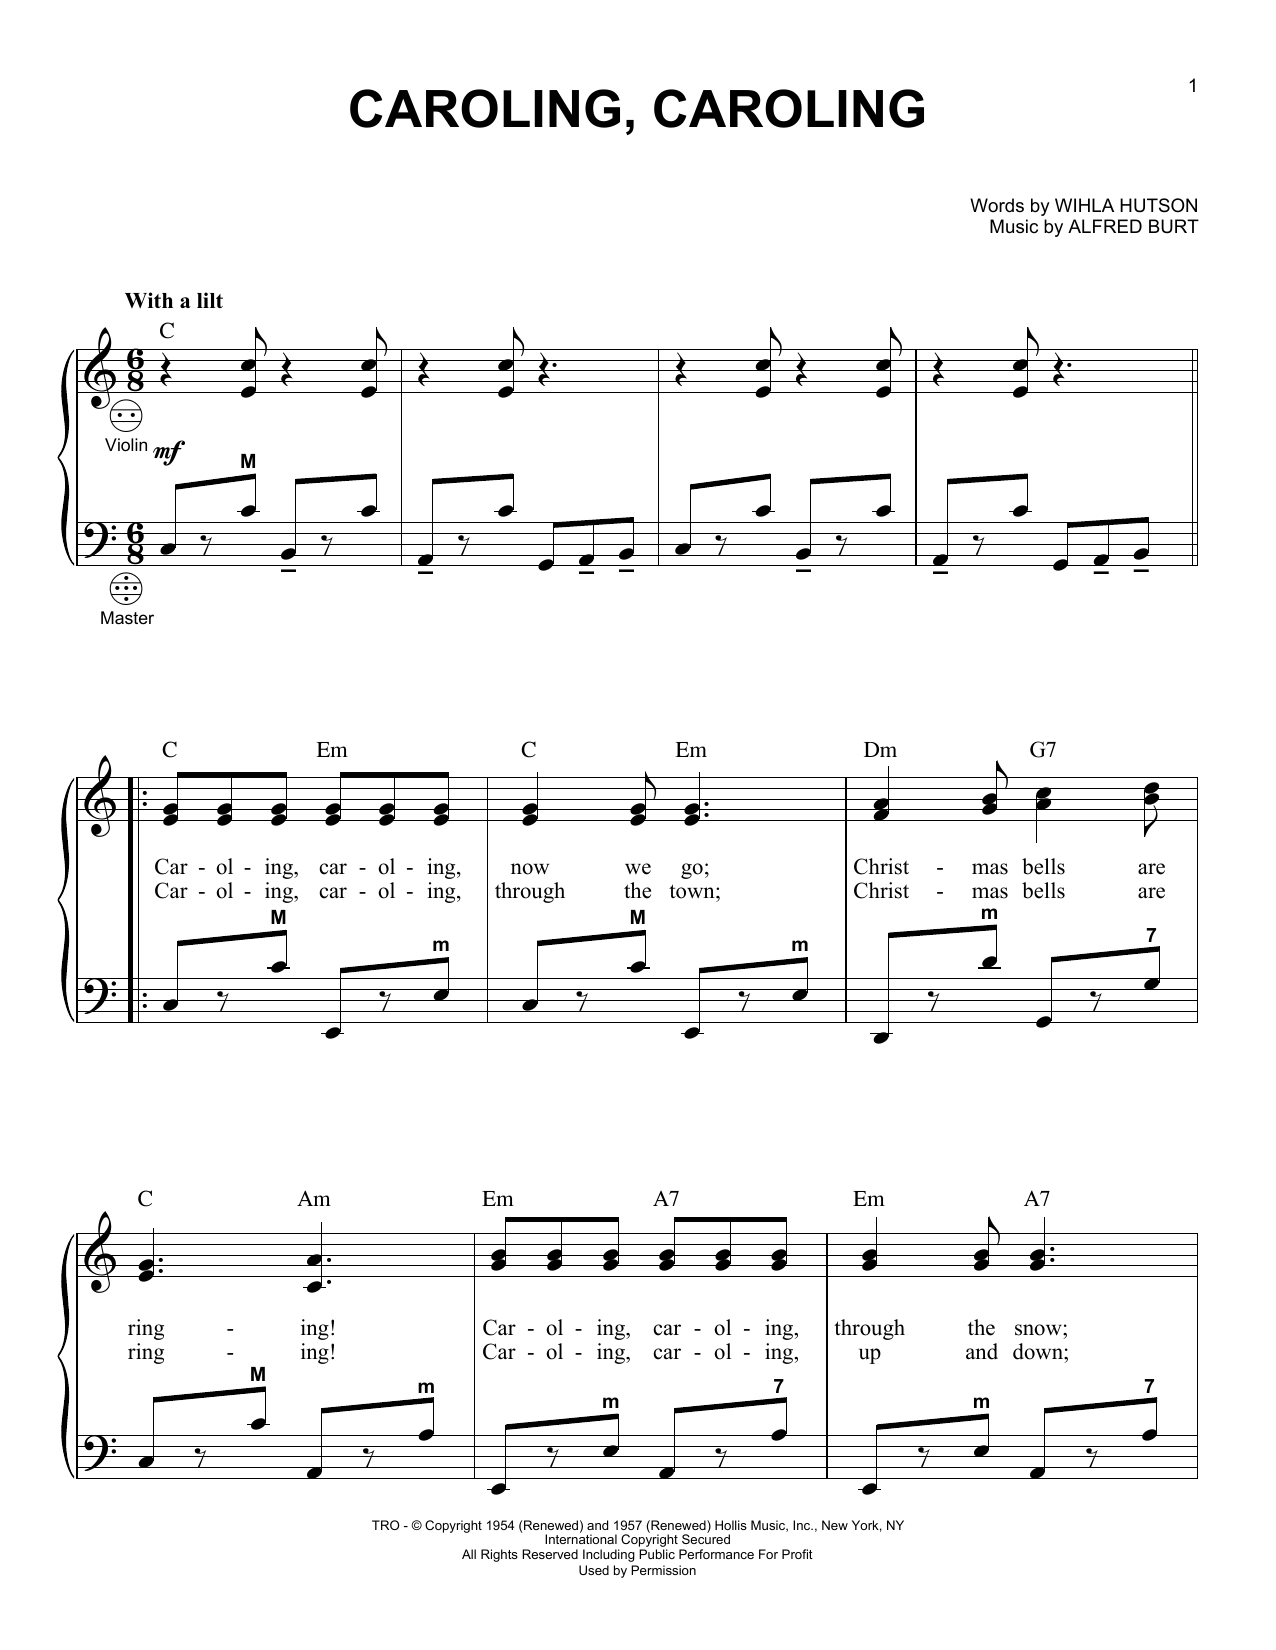 Download Alfred Burt Caroling, Caroling Sheet Music and learn how to play Trombone PDF digital score in minutes